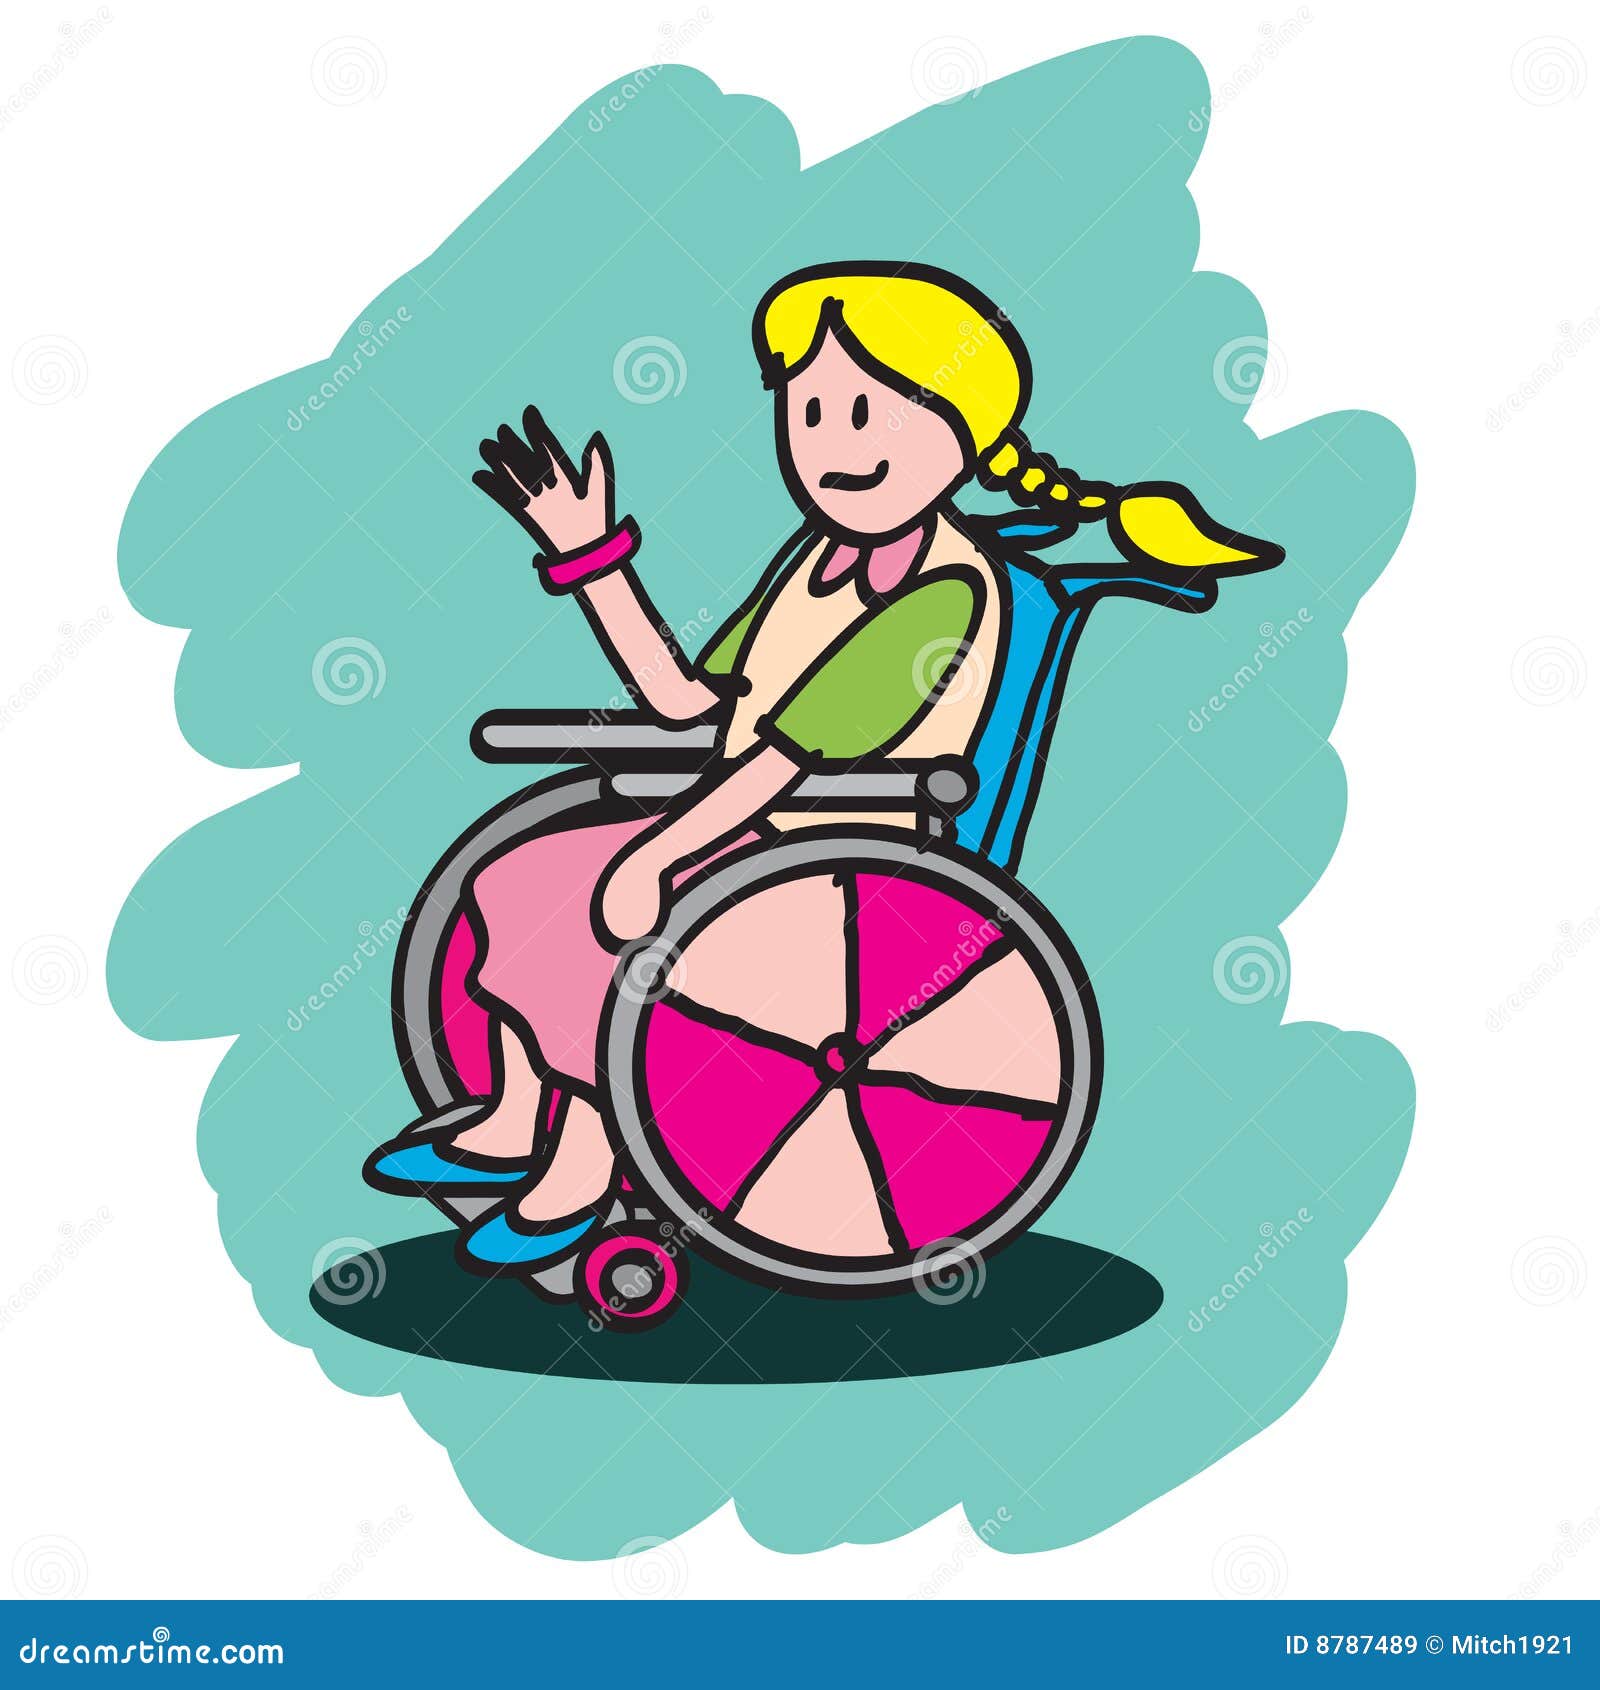 clipart girl in wheelchair - photo #41